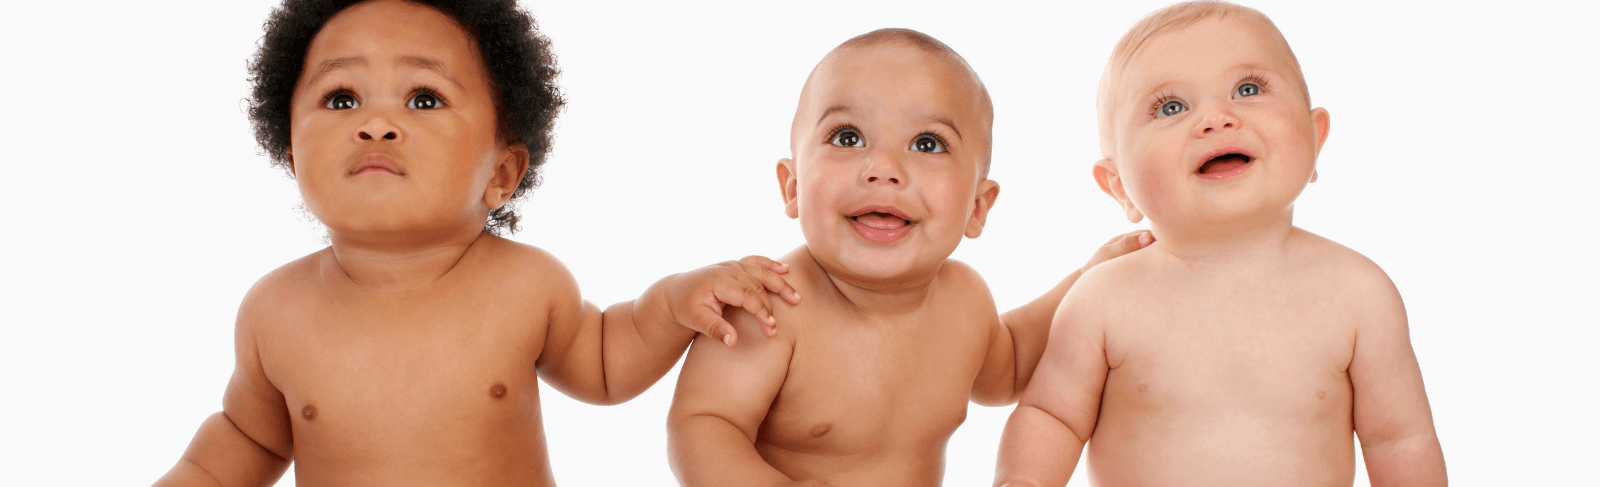 three shirtless babies on white background